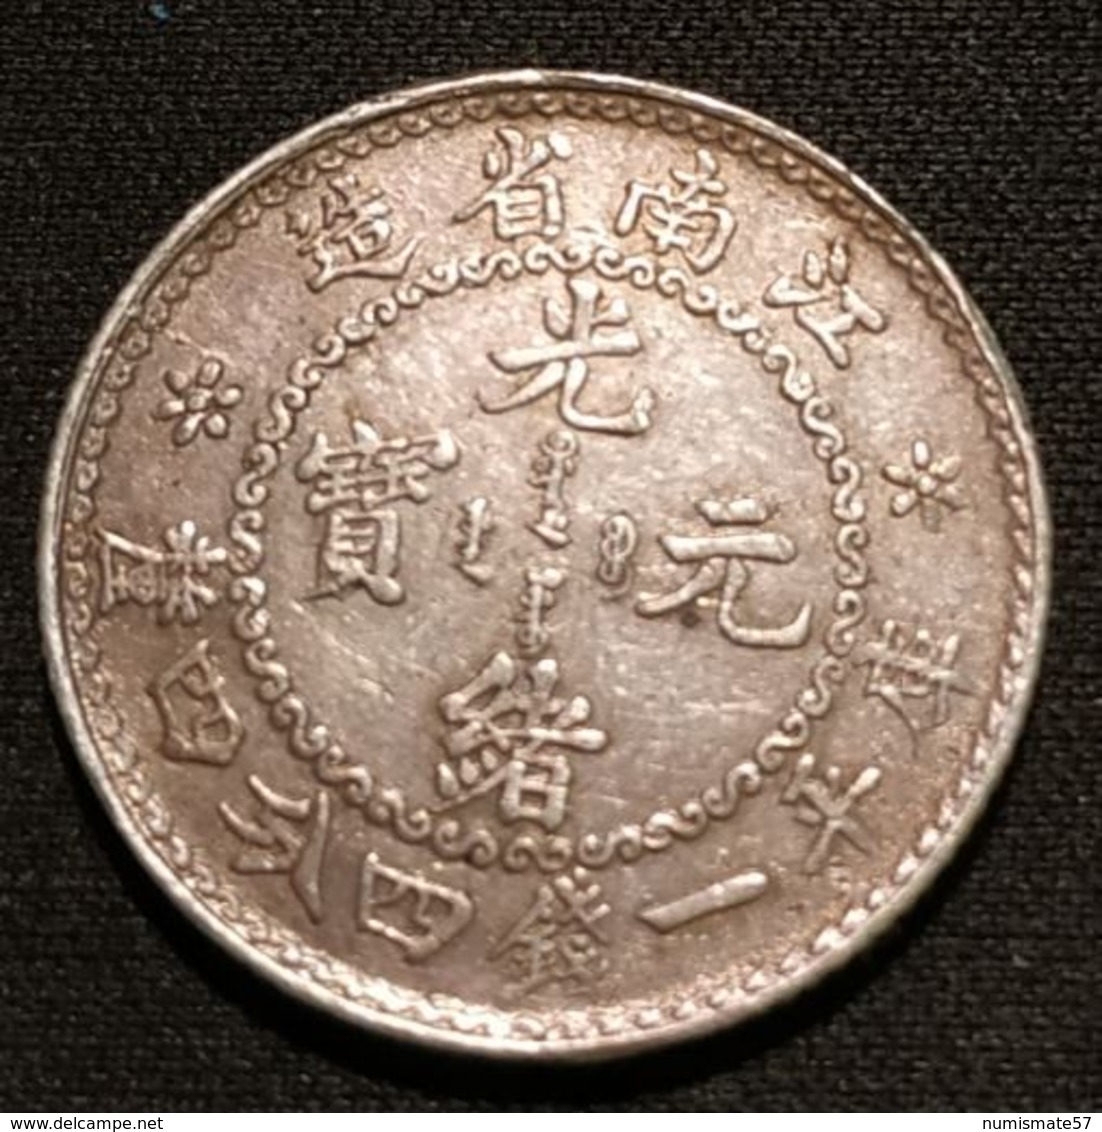 RARE - CHINE - CHINA - 1 MACE 4,4 CANDAREENS ( 1898 - 1904 ) - Argent - Silver - KM 143a - KIANG NAN PROVINCE - Cina